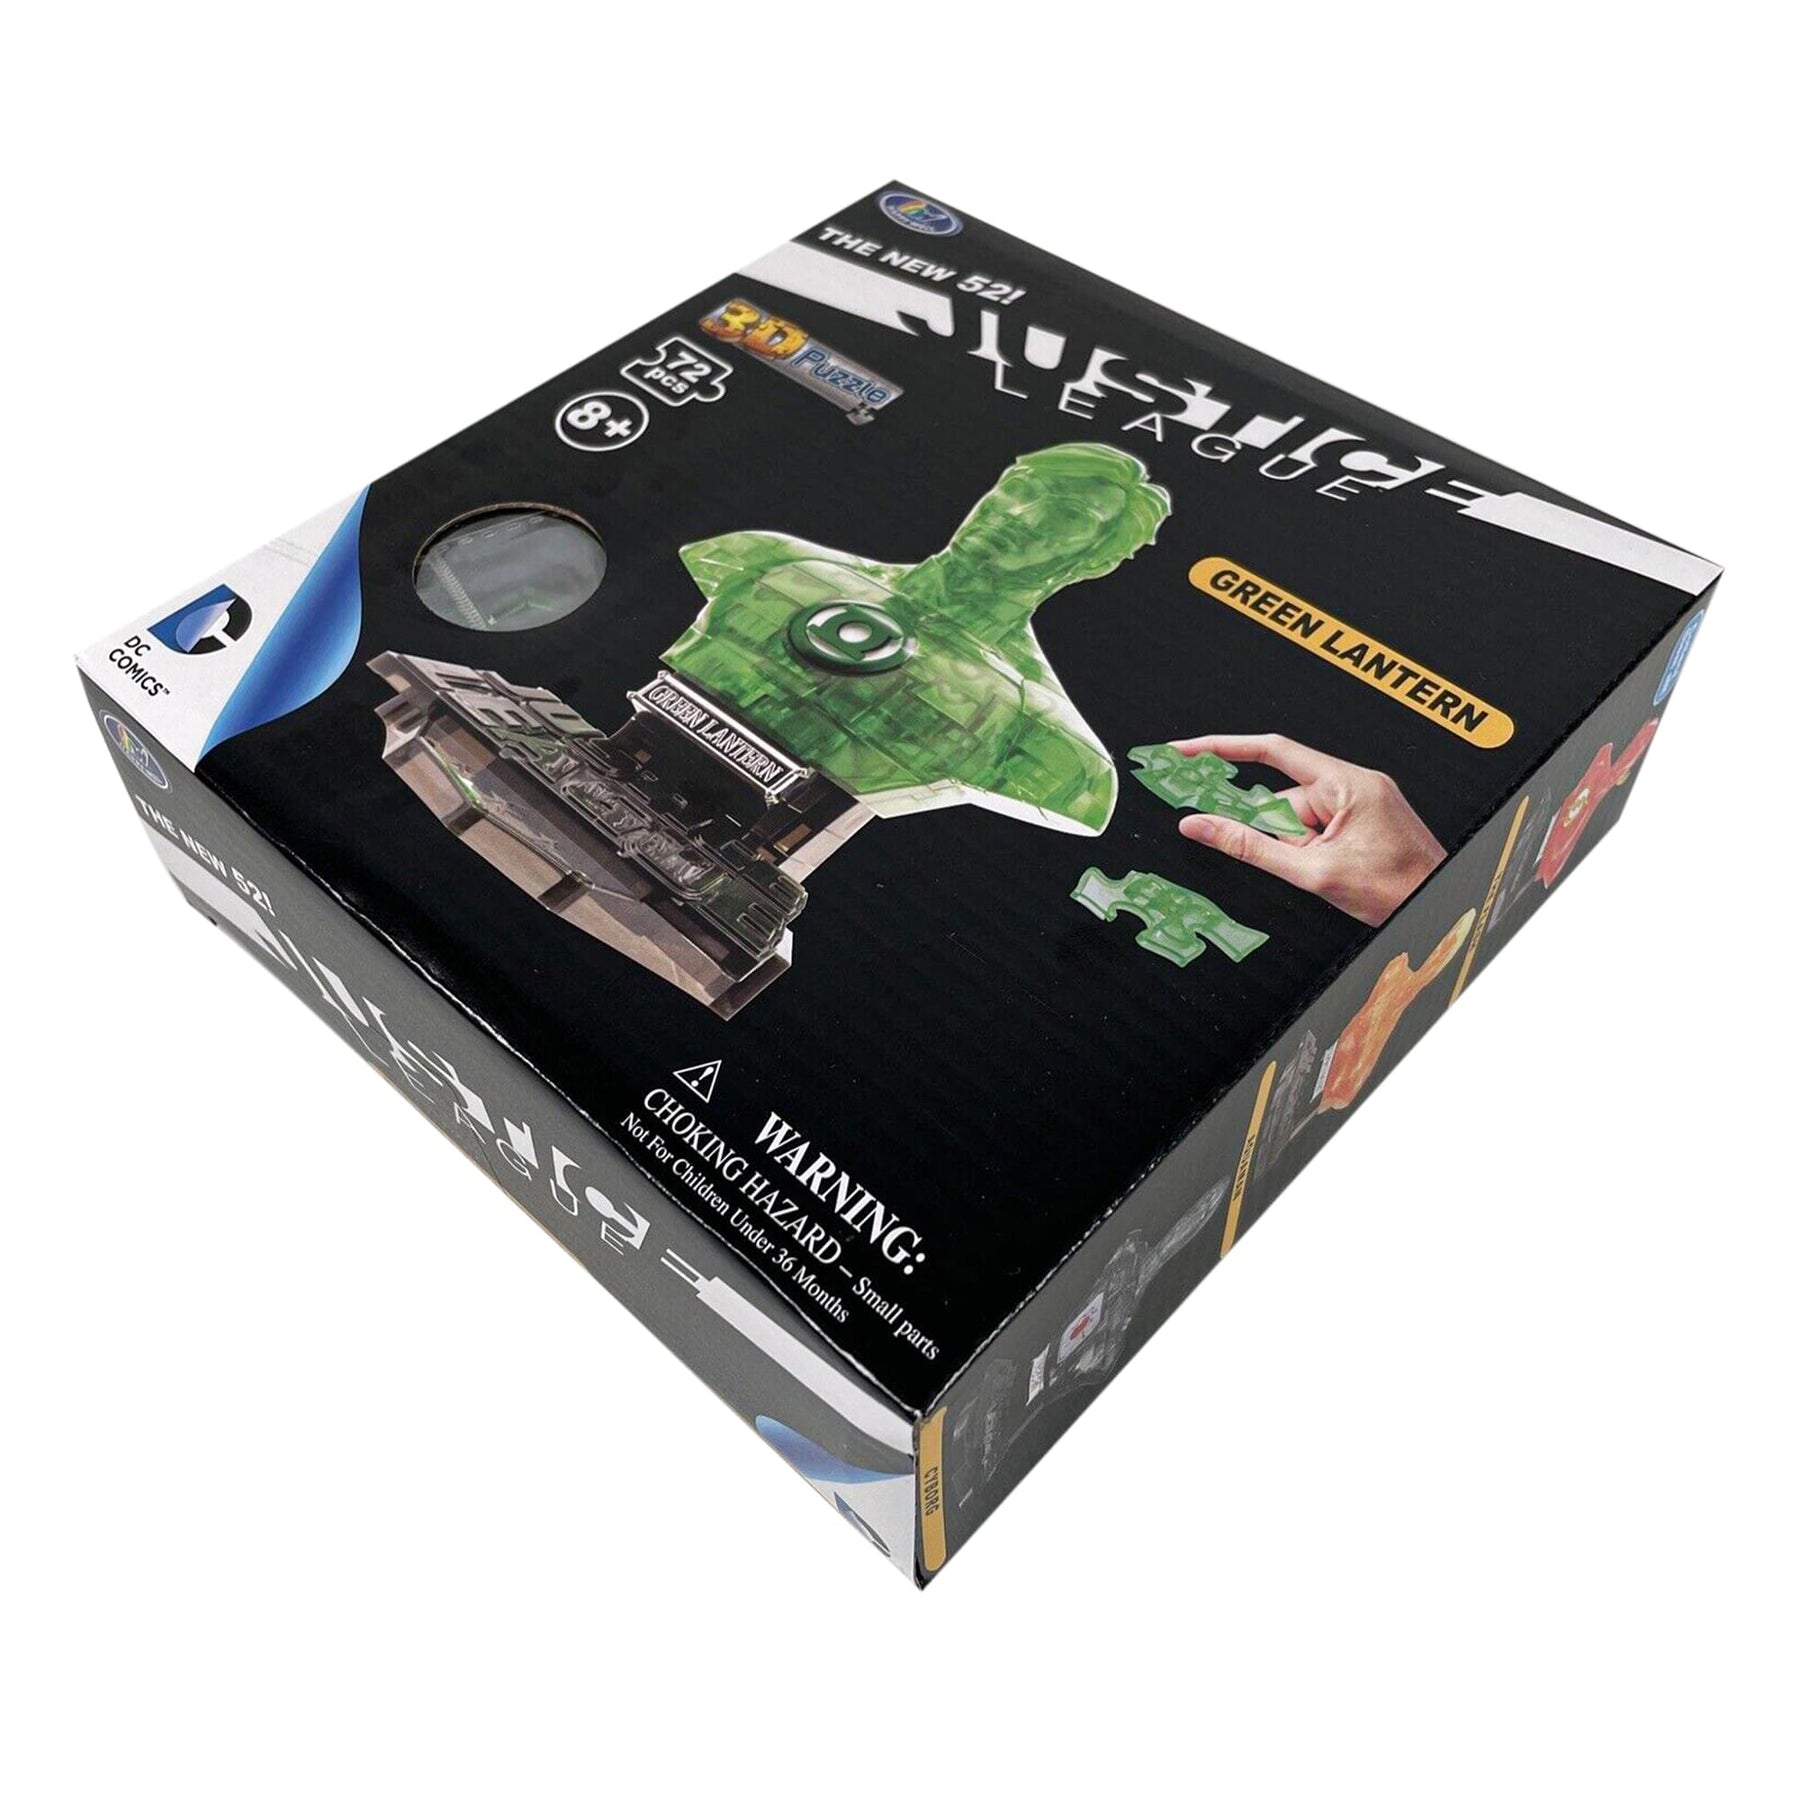 Eaglemoss DC Green Lantern 72 Piece 3D Jigsaw Puzzle | Crystal Color Brand New